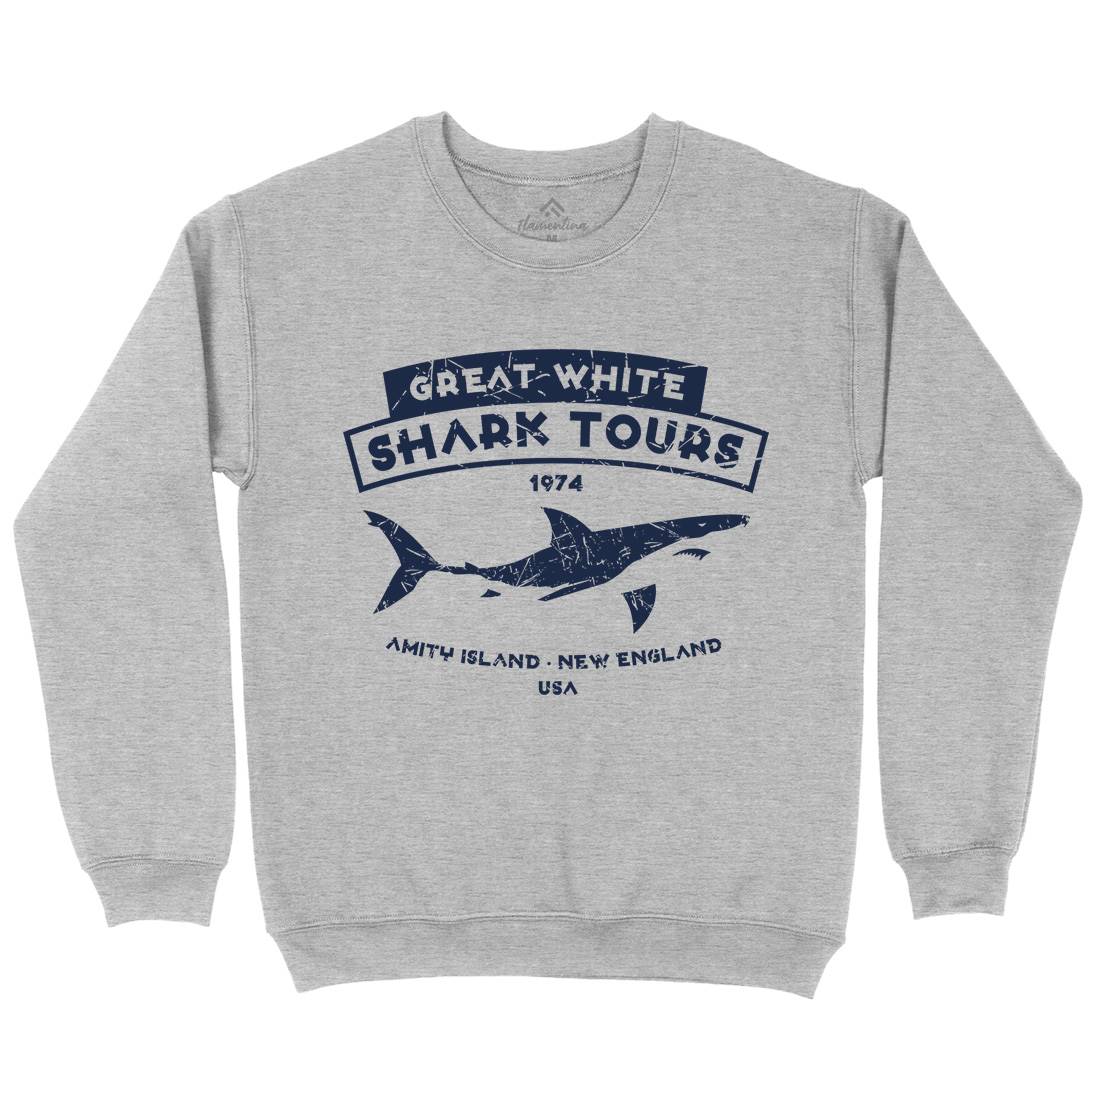 Great White Shark Tours Mens Crew Neck Sweatshirt Navy D348